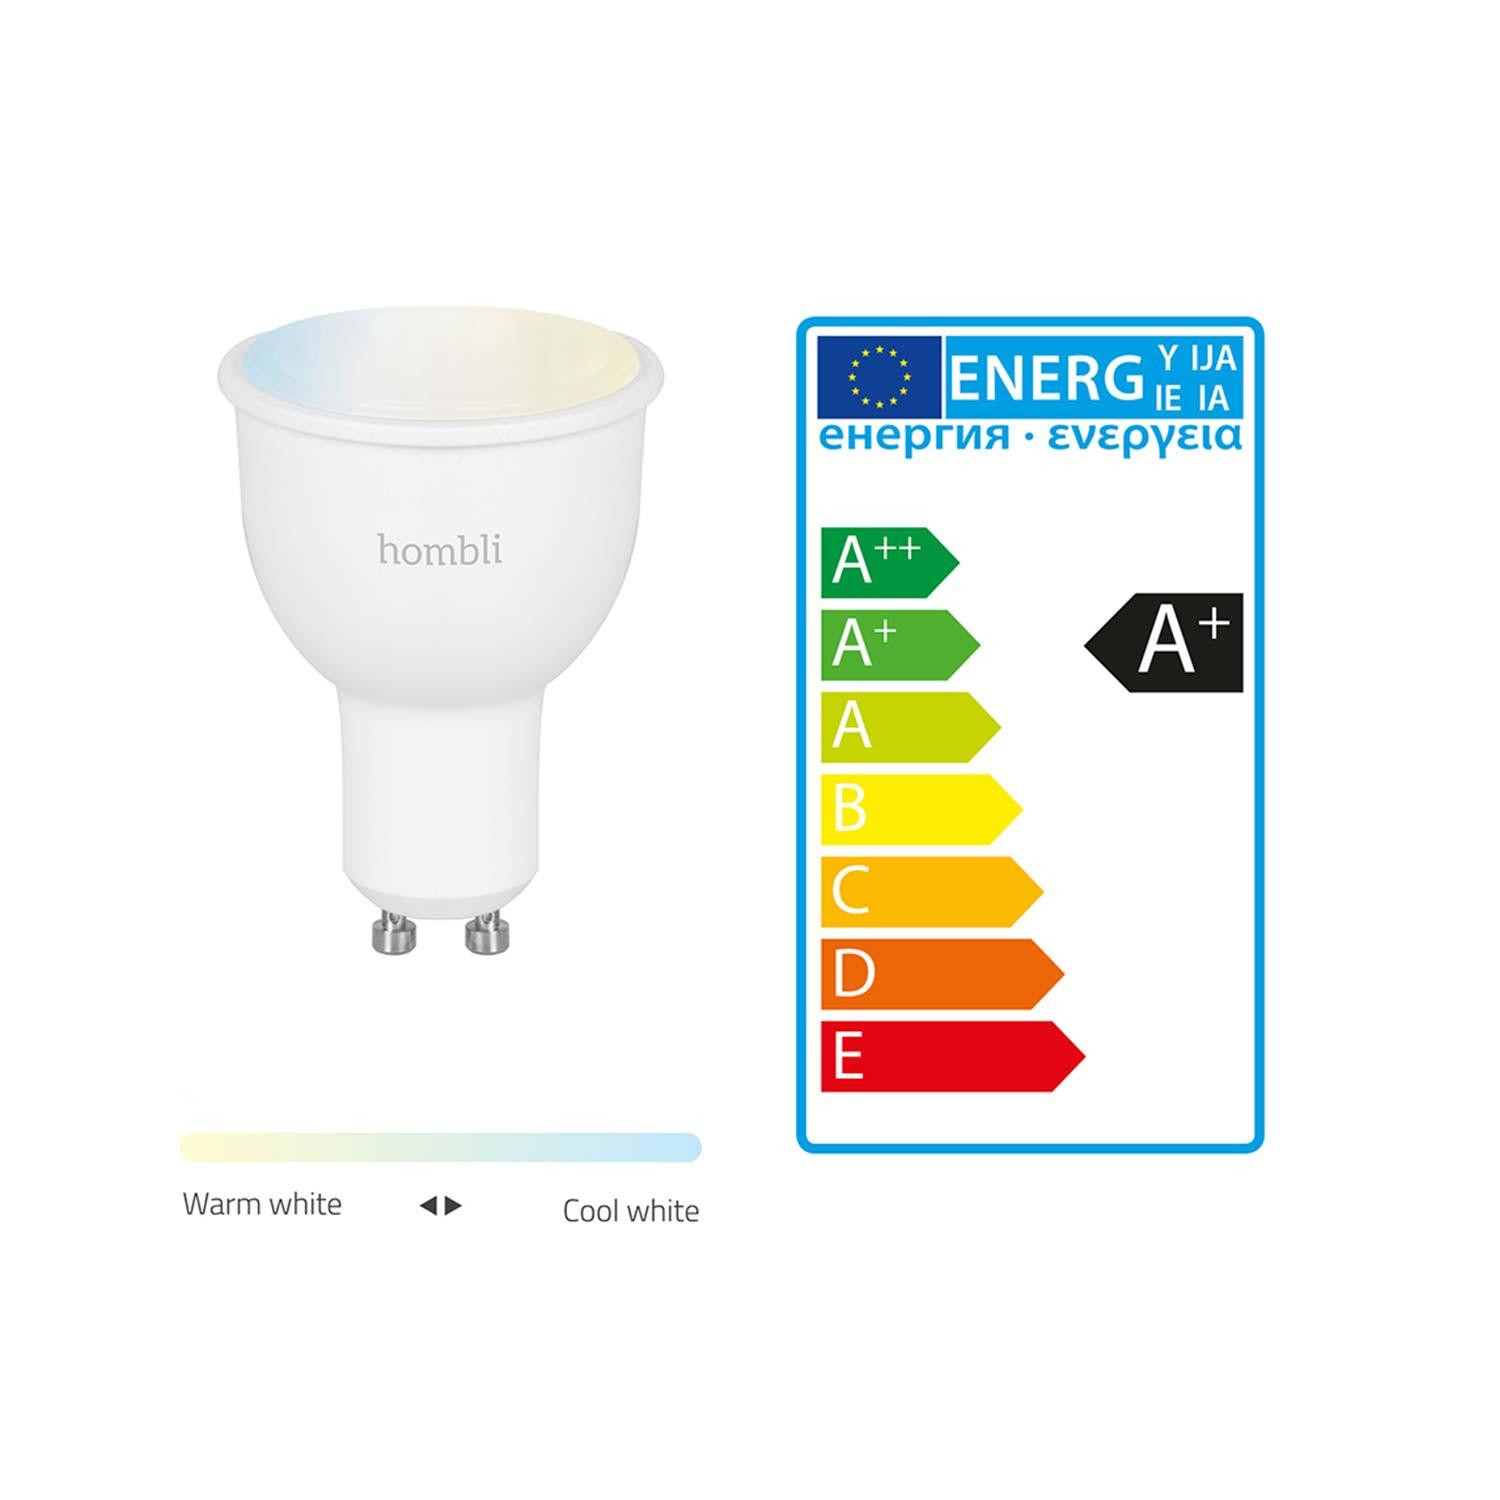 Hombli Smart Spot GU10 White-Lampe + gratis Smart Spot GU10 White - Energieeffizienz